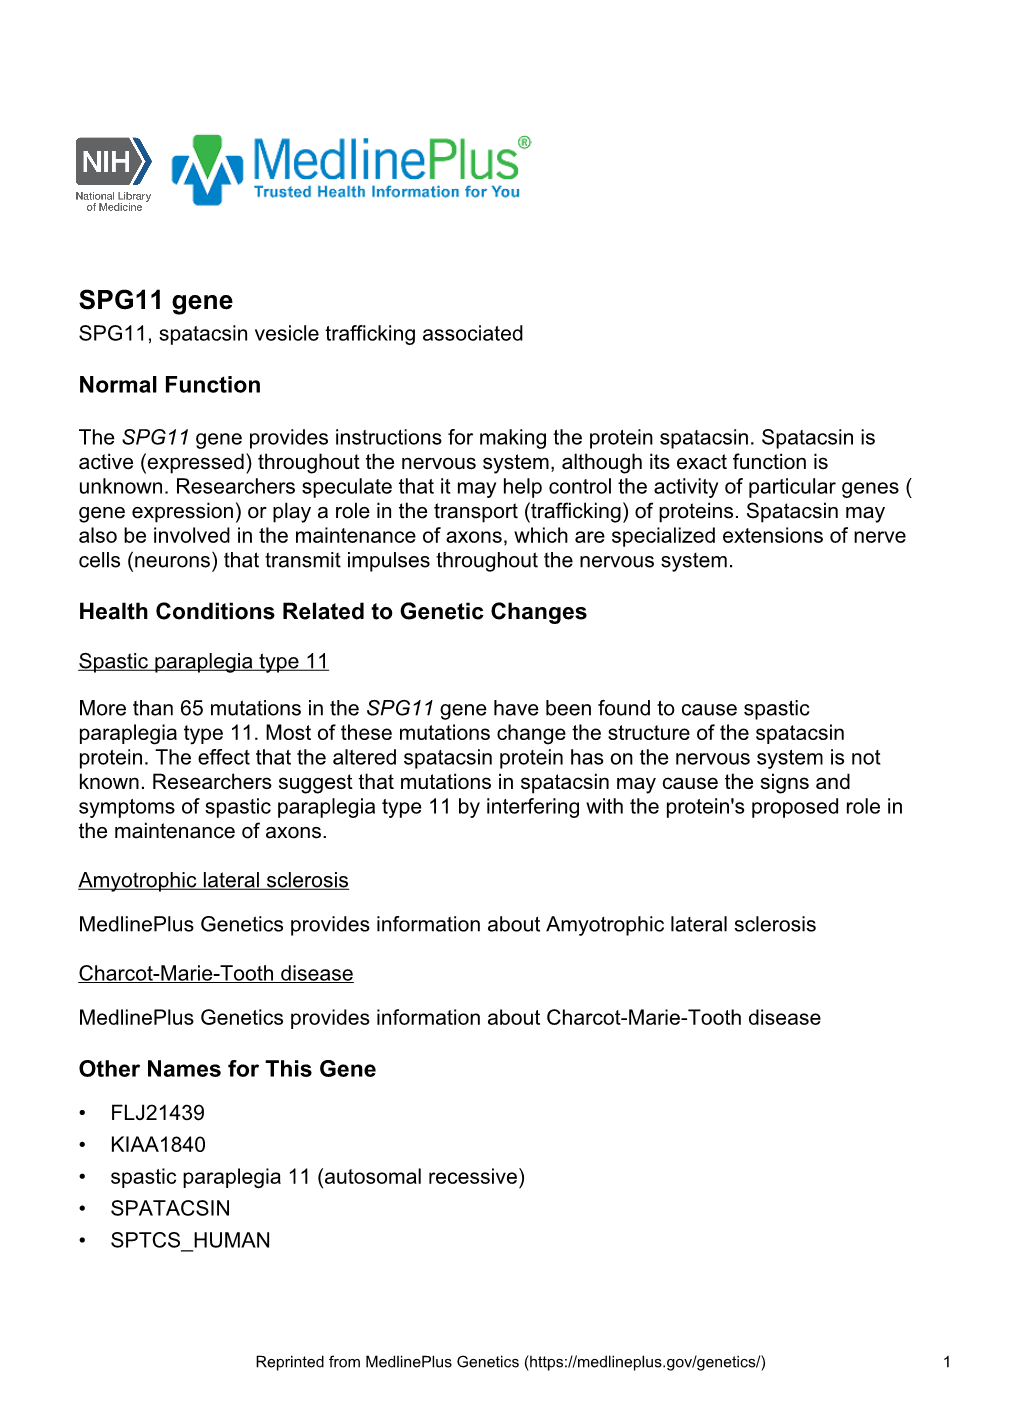 SPG11 Gene SPG11, Spatacsin Vesicle Trafficking Associated